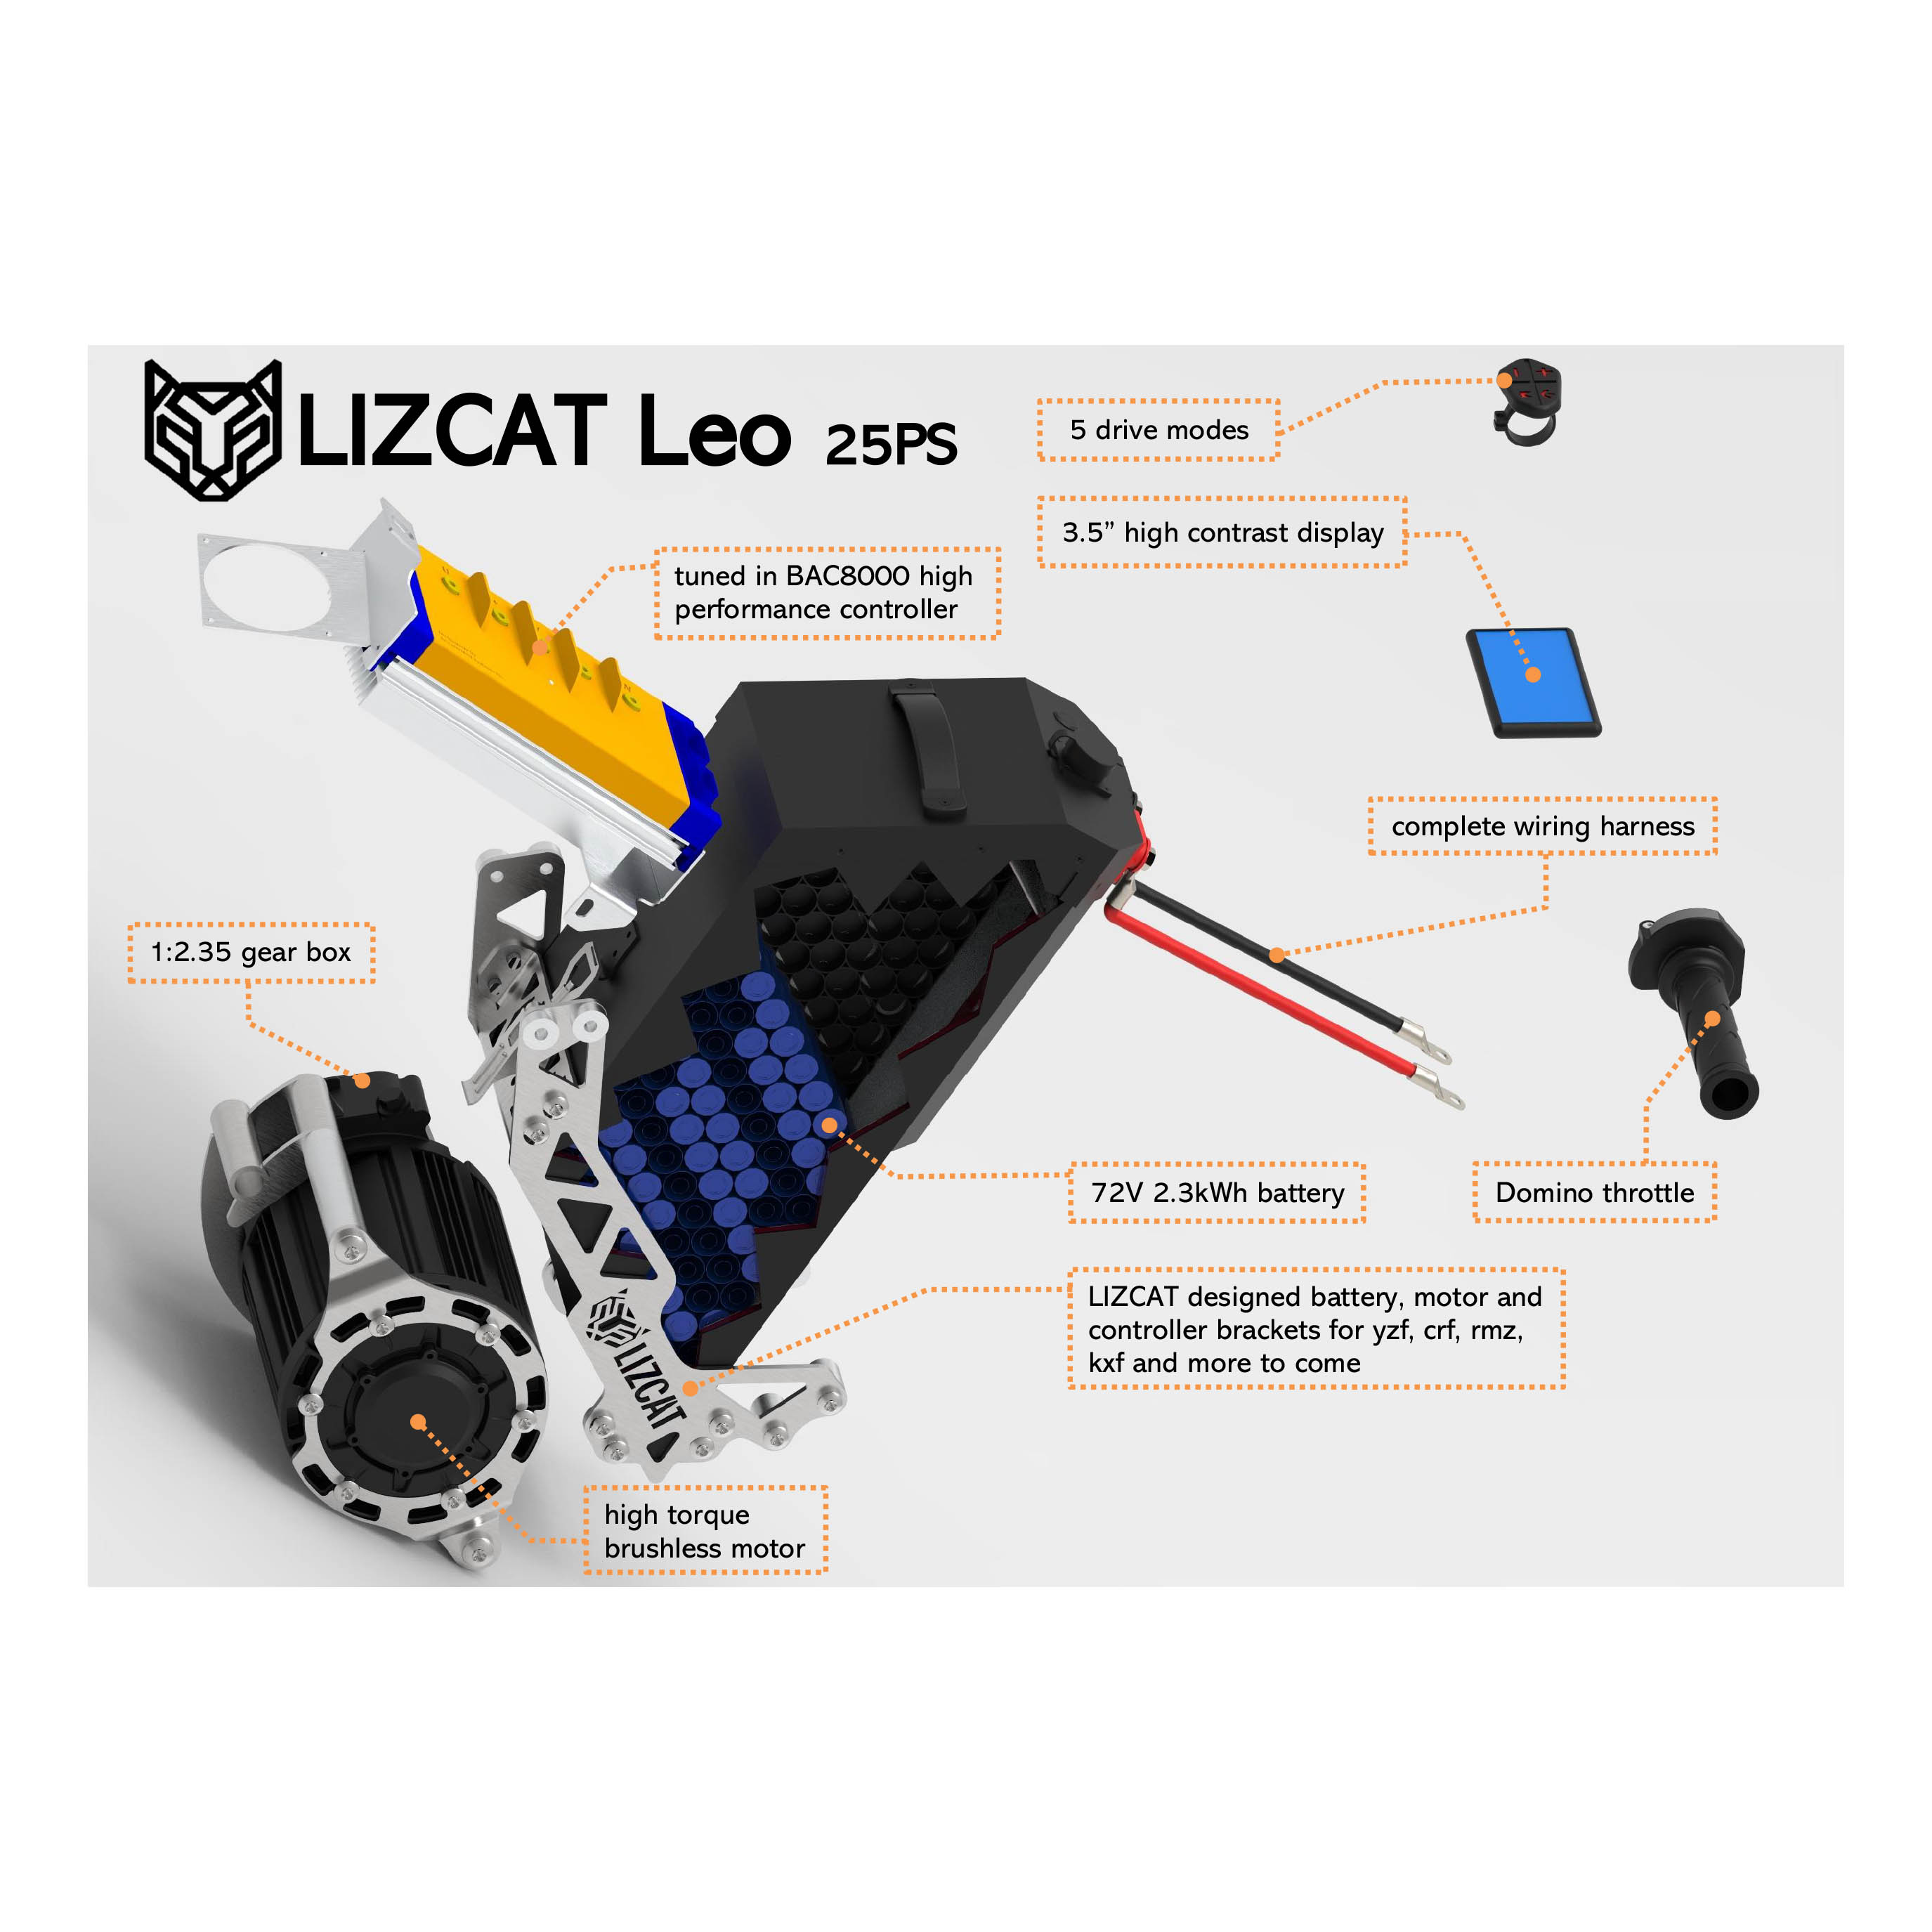 Lizcat - Leo, made in Switzerland